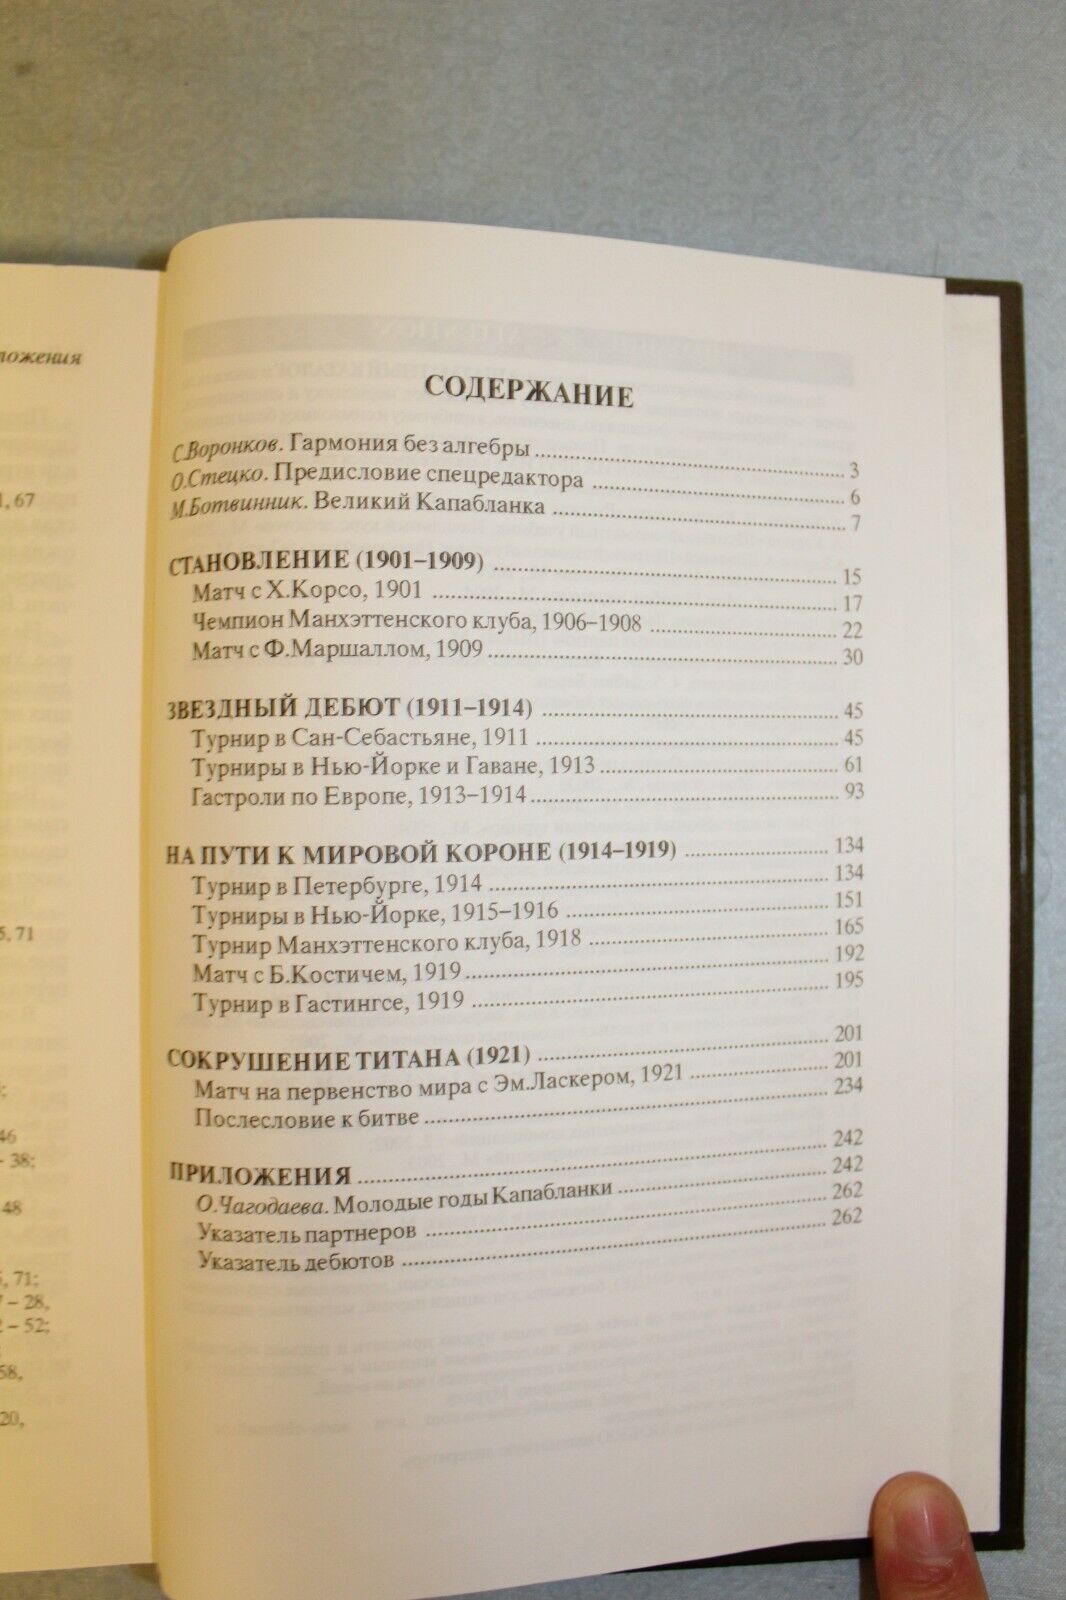 10695.2 Russian Chess Books: J. R. Capablanca. Self-Portrait of a Genius. Vol 1 & 2